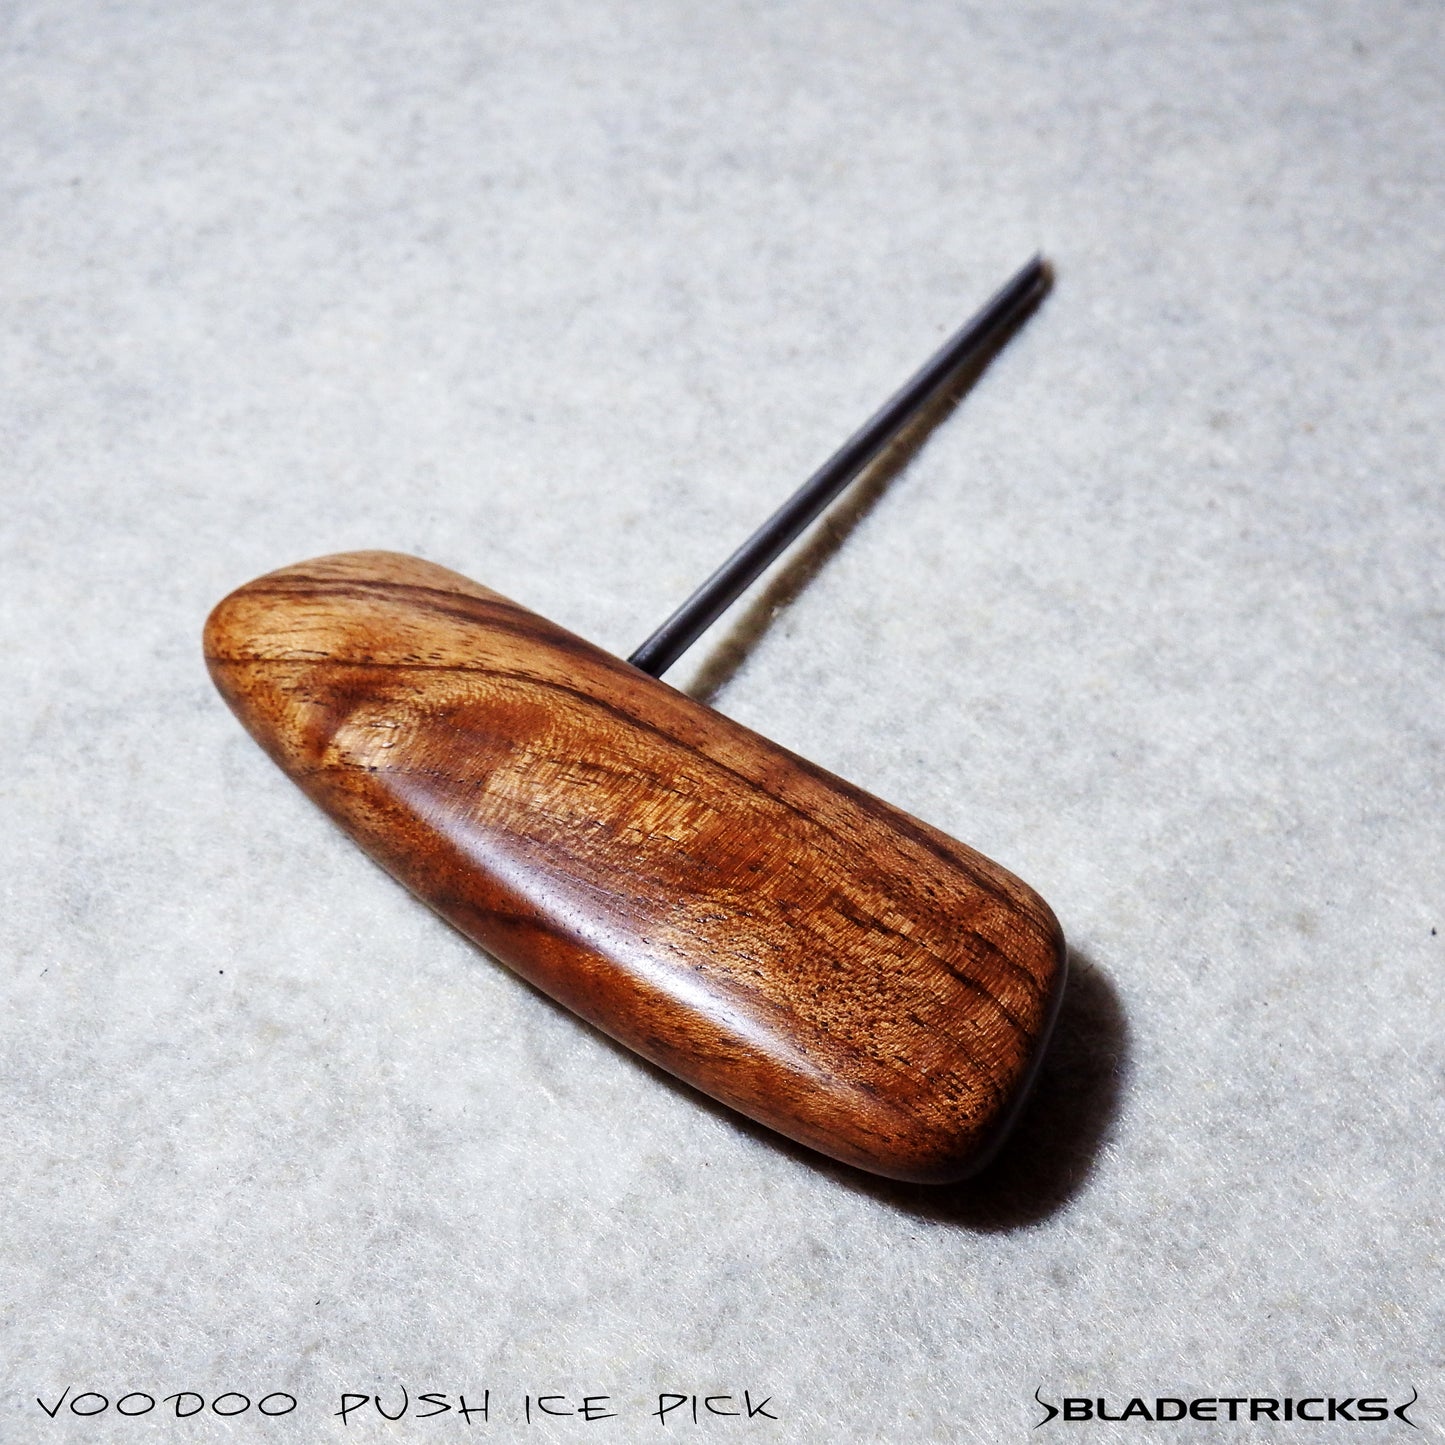 Elegant custom Voodoo Push Dagger by Bladetricks Knife maker